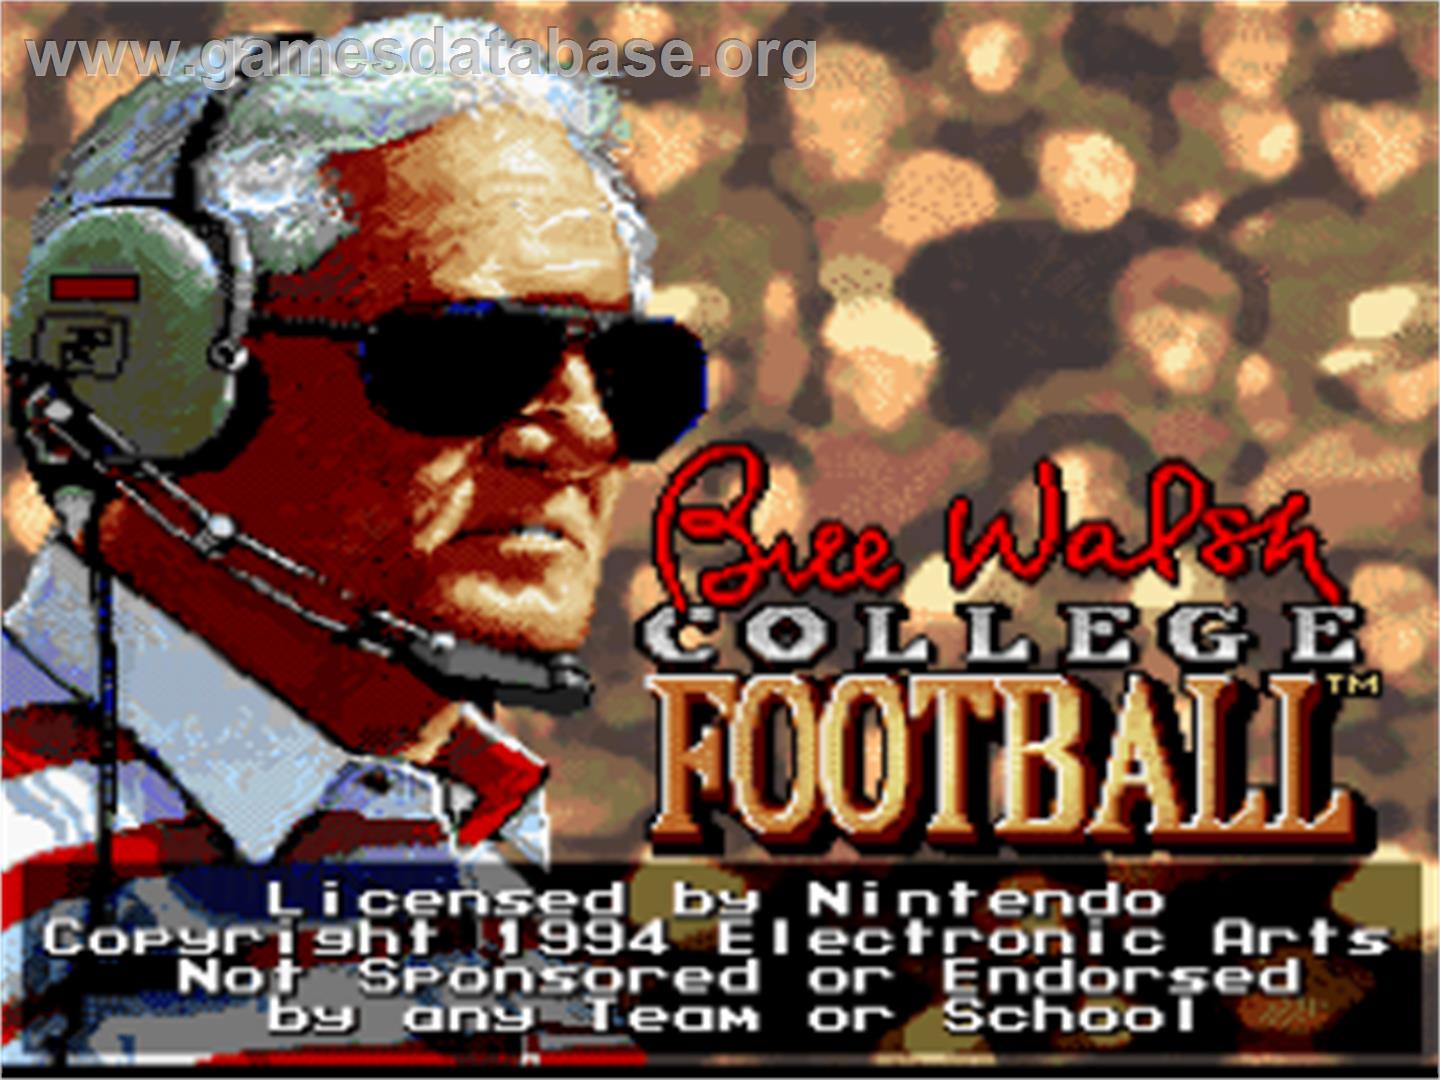 Bill Walsh College Football - Nintendo SNES - Artwork - Title Screen